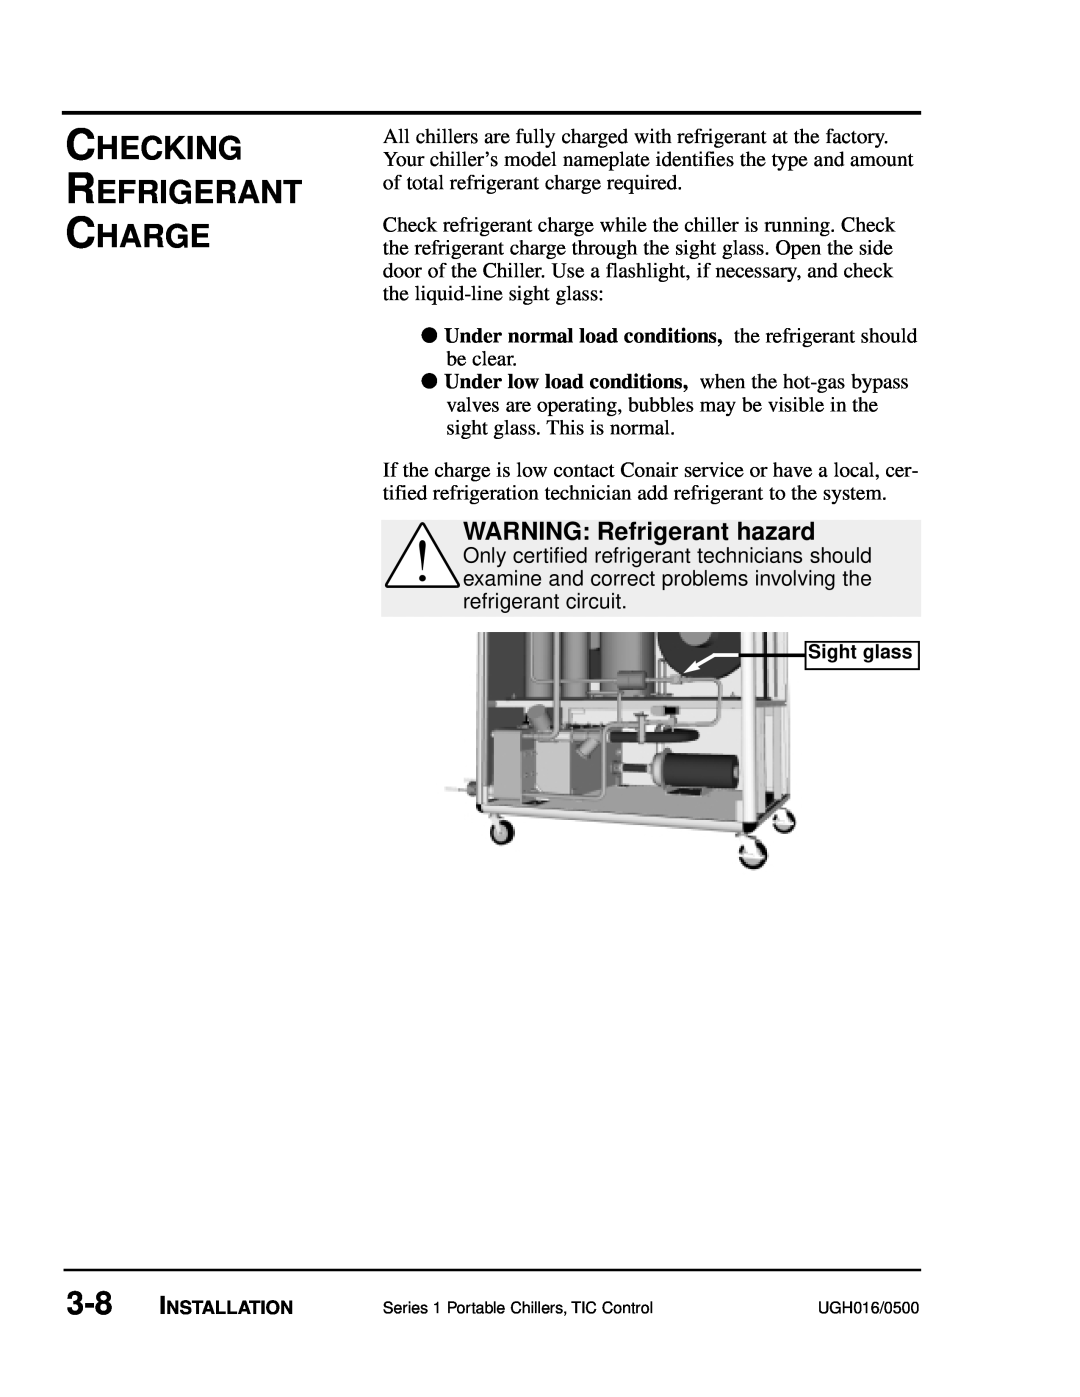 Conair UGH016/0500 manual Checking Refrigerant Charge, WARNING Refrigerant hazard, Sight glass 